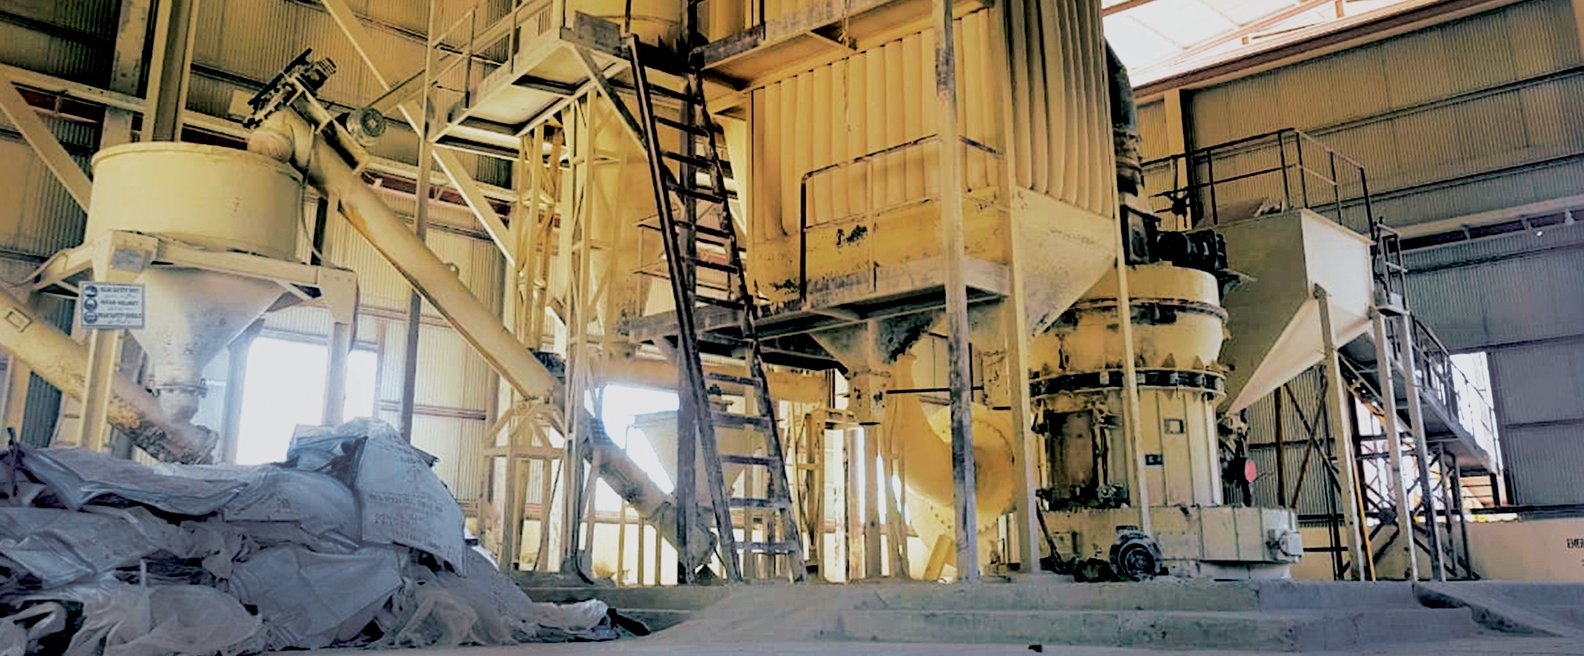 Bayrites grinding mill at Khuzdar Balochistan